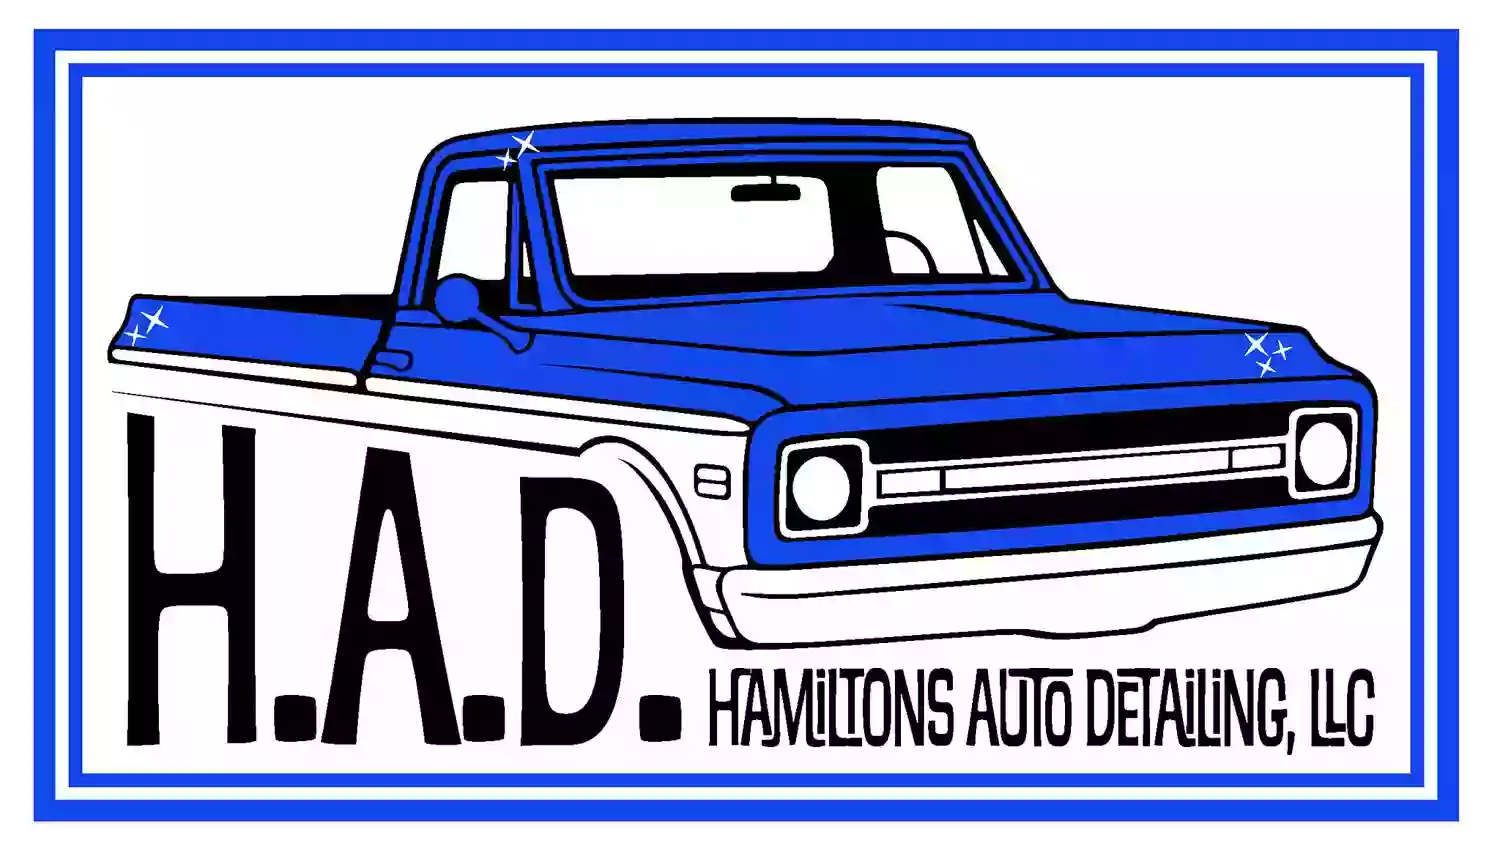 Hamiltons Auto Detailing LLC